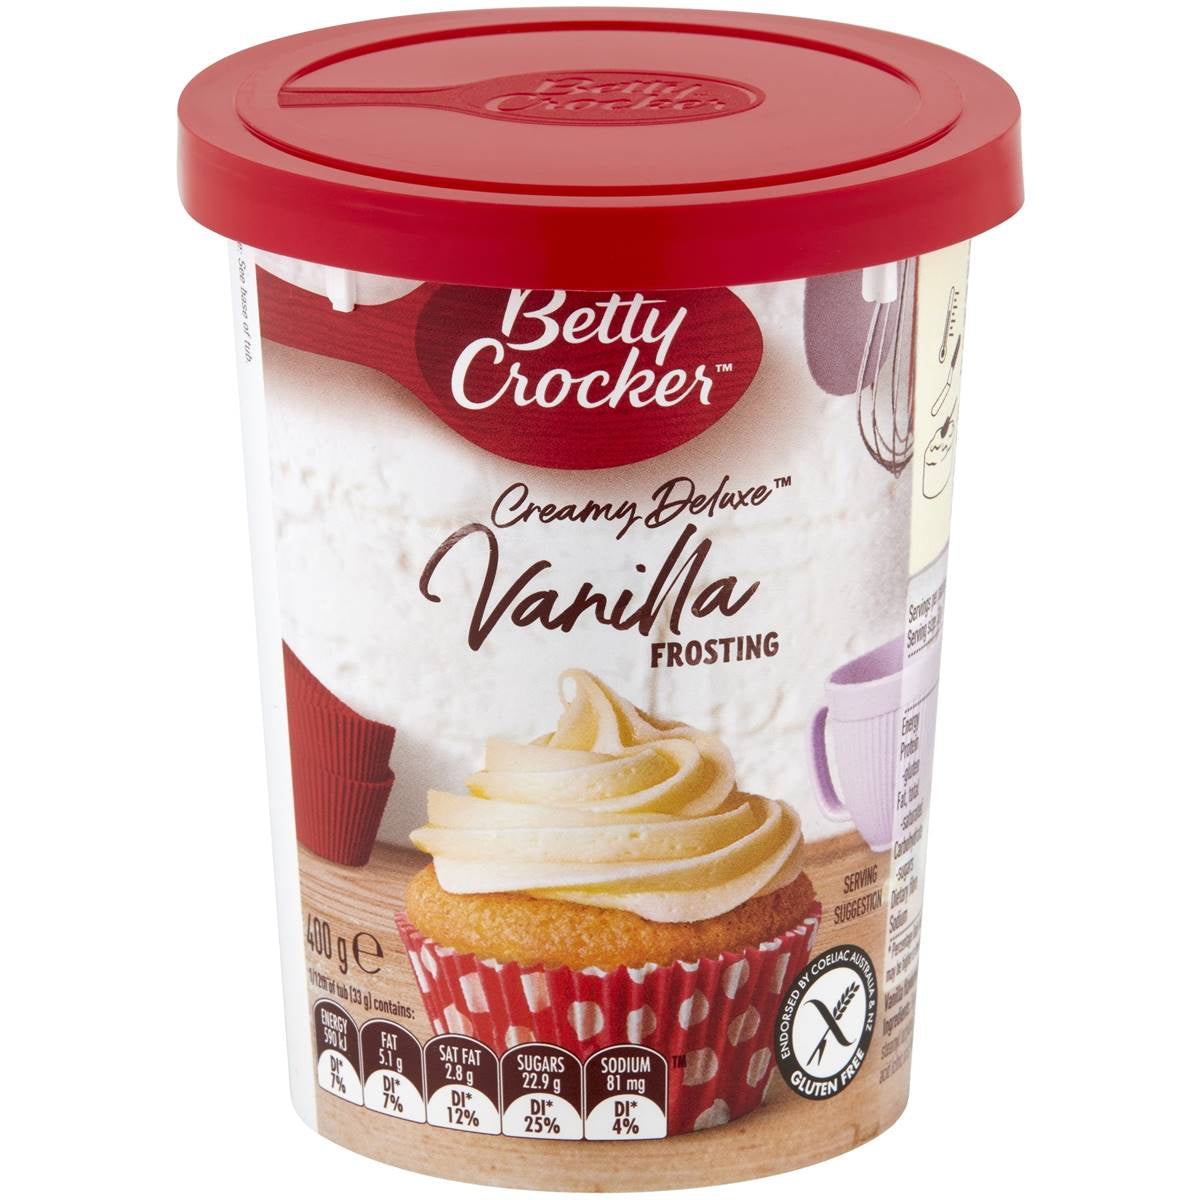 Betty Crocker Vanilla Frosting 400g